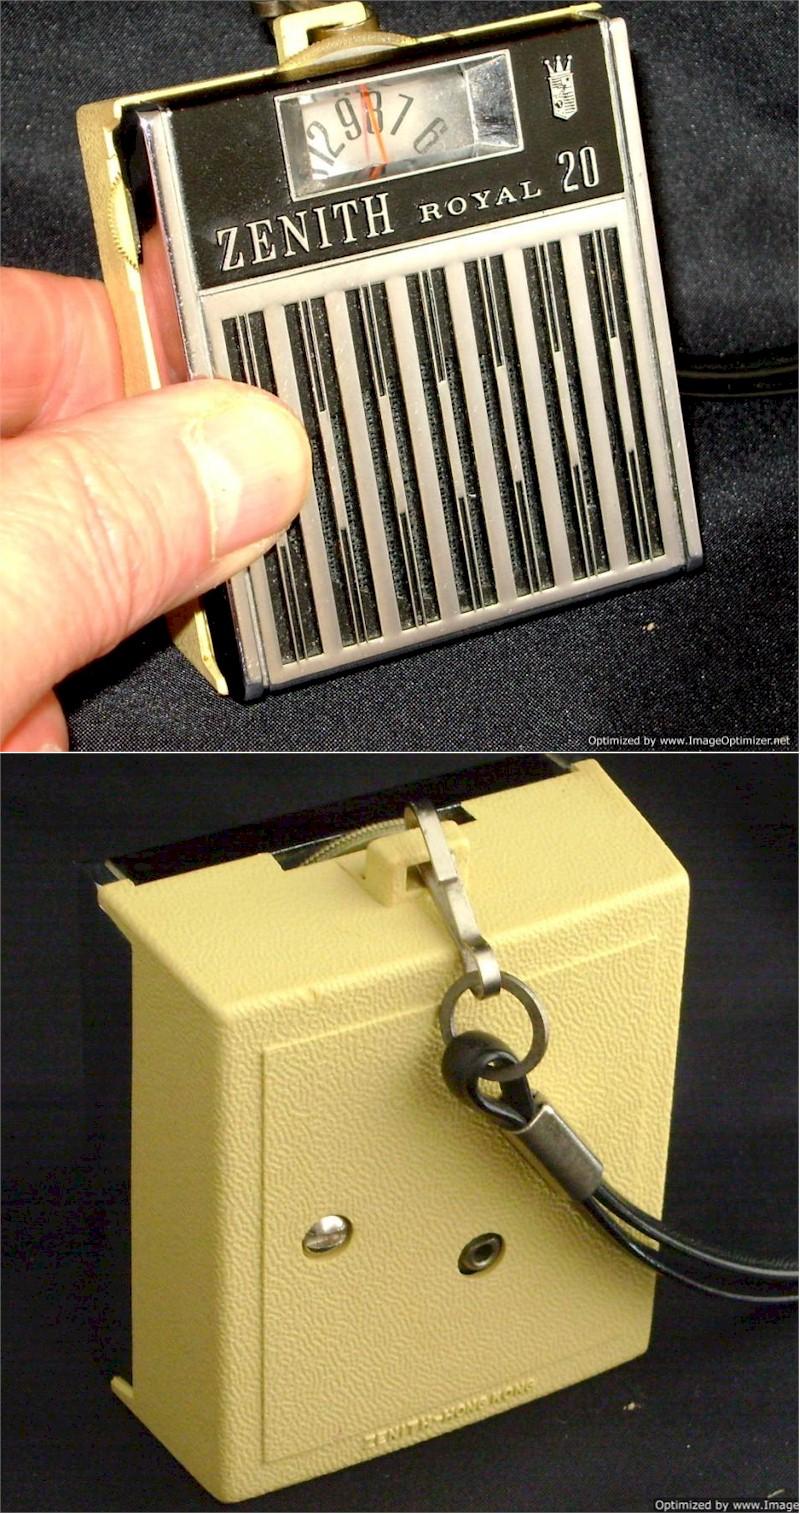 Zenith Royal 20 Micro Pocket Transistor (1968)